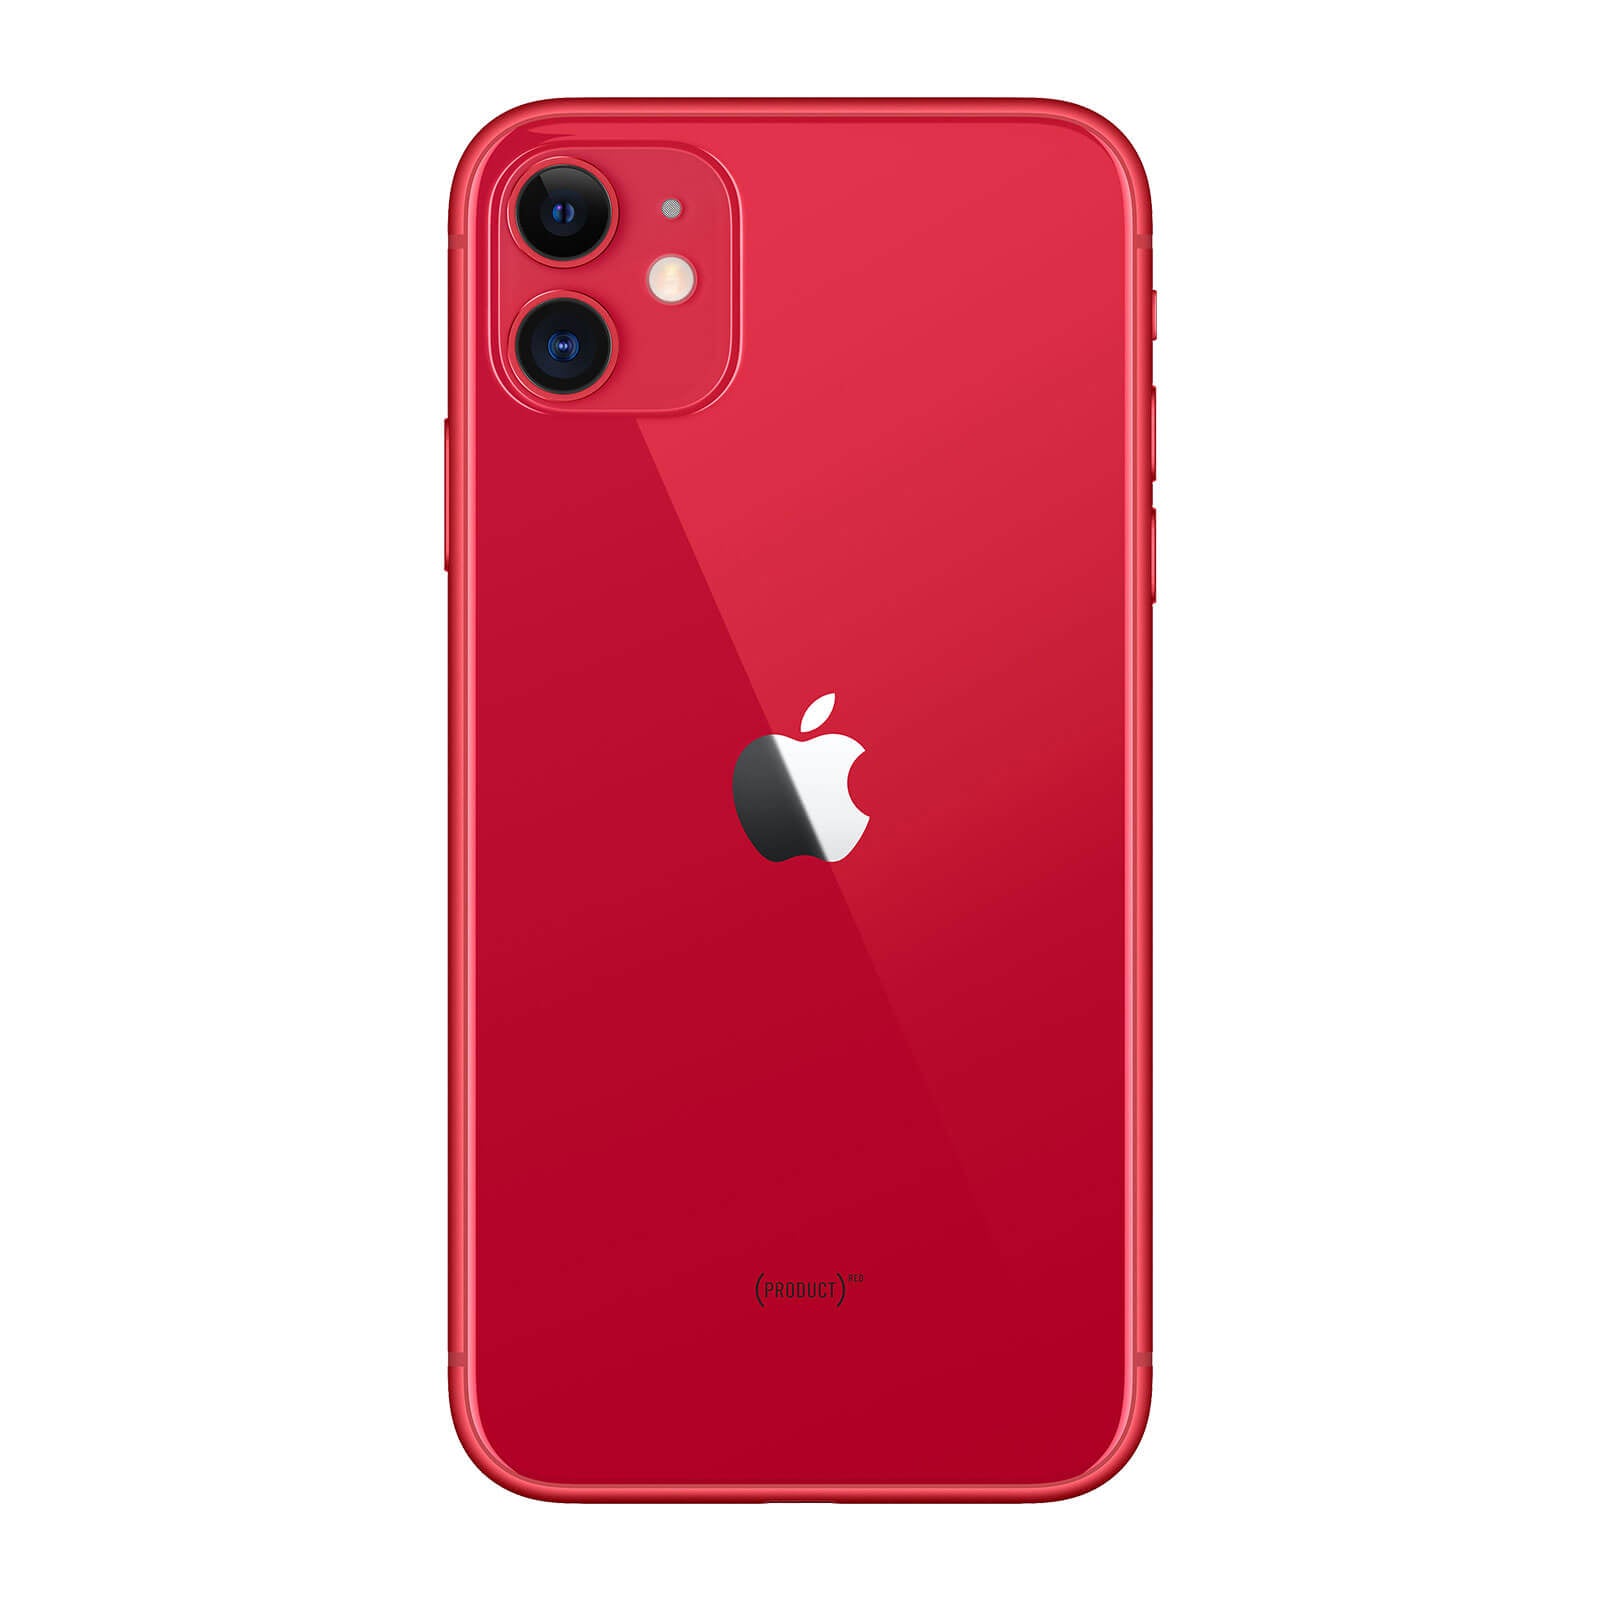 Apple iPhone 11 64GB Red Very Good - Unlocked